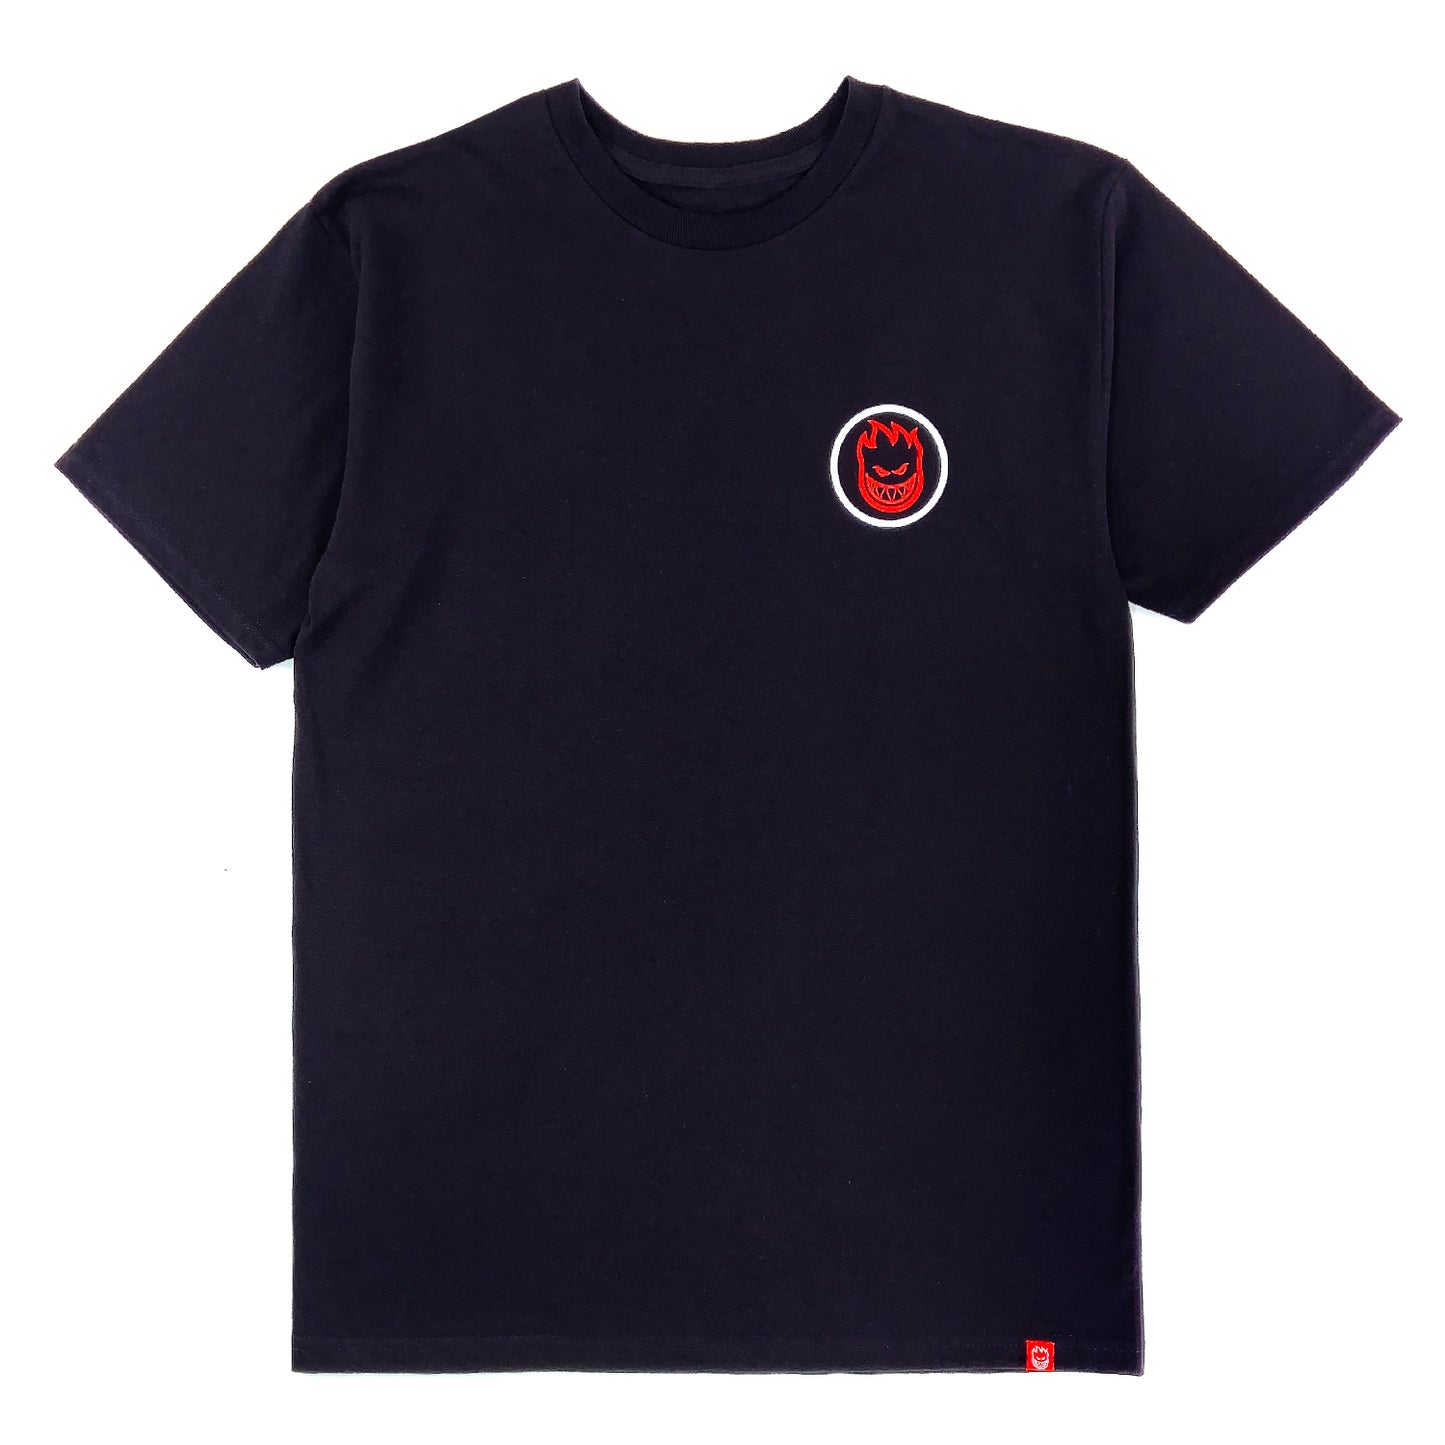 Spitfire - Classic Swirl Fade - T Shirt - Black - Prime Delux Store